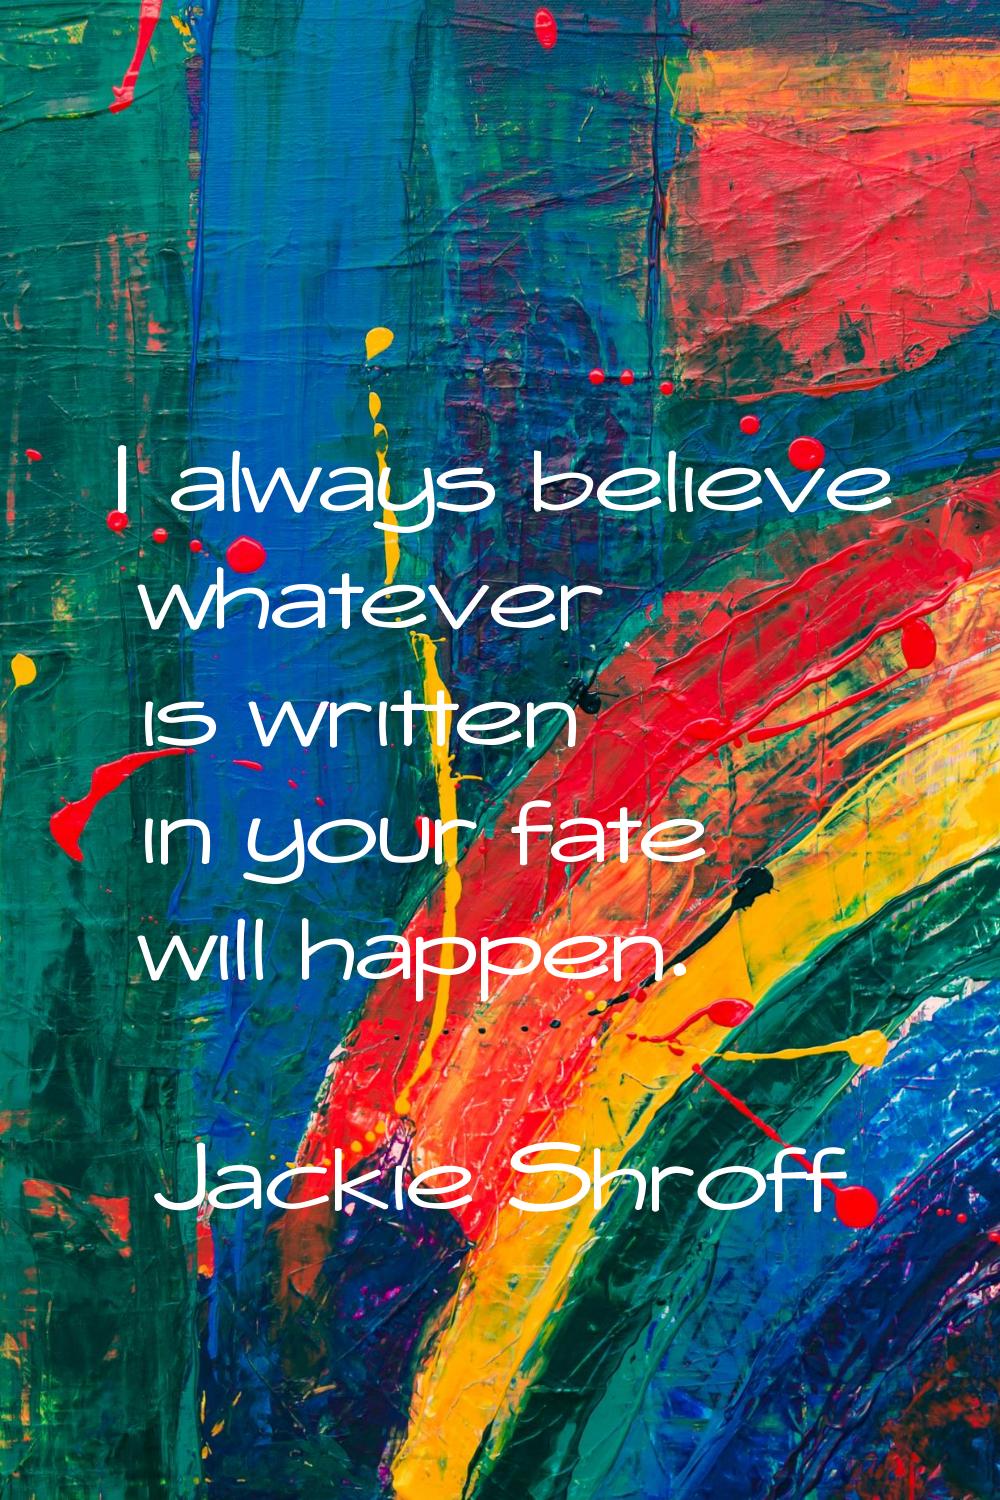 I always believe whatever is written in your fate will happen.